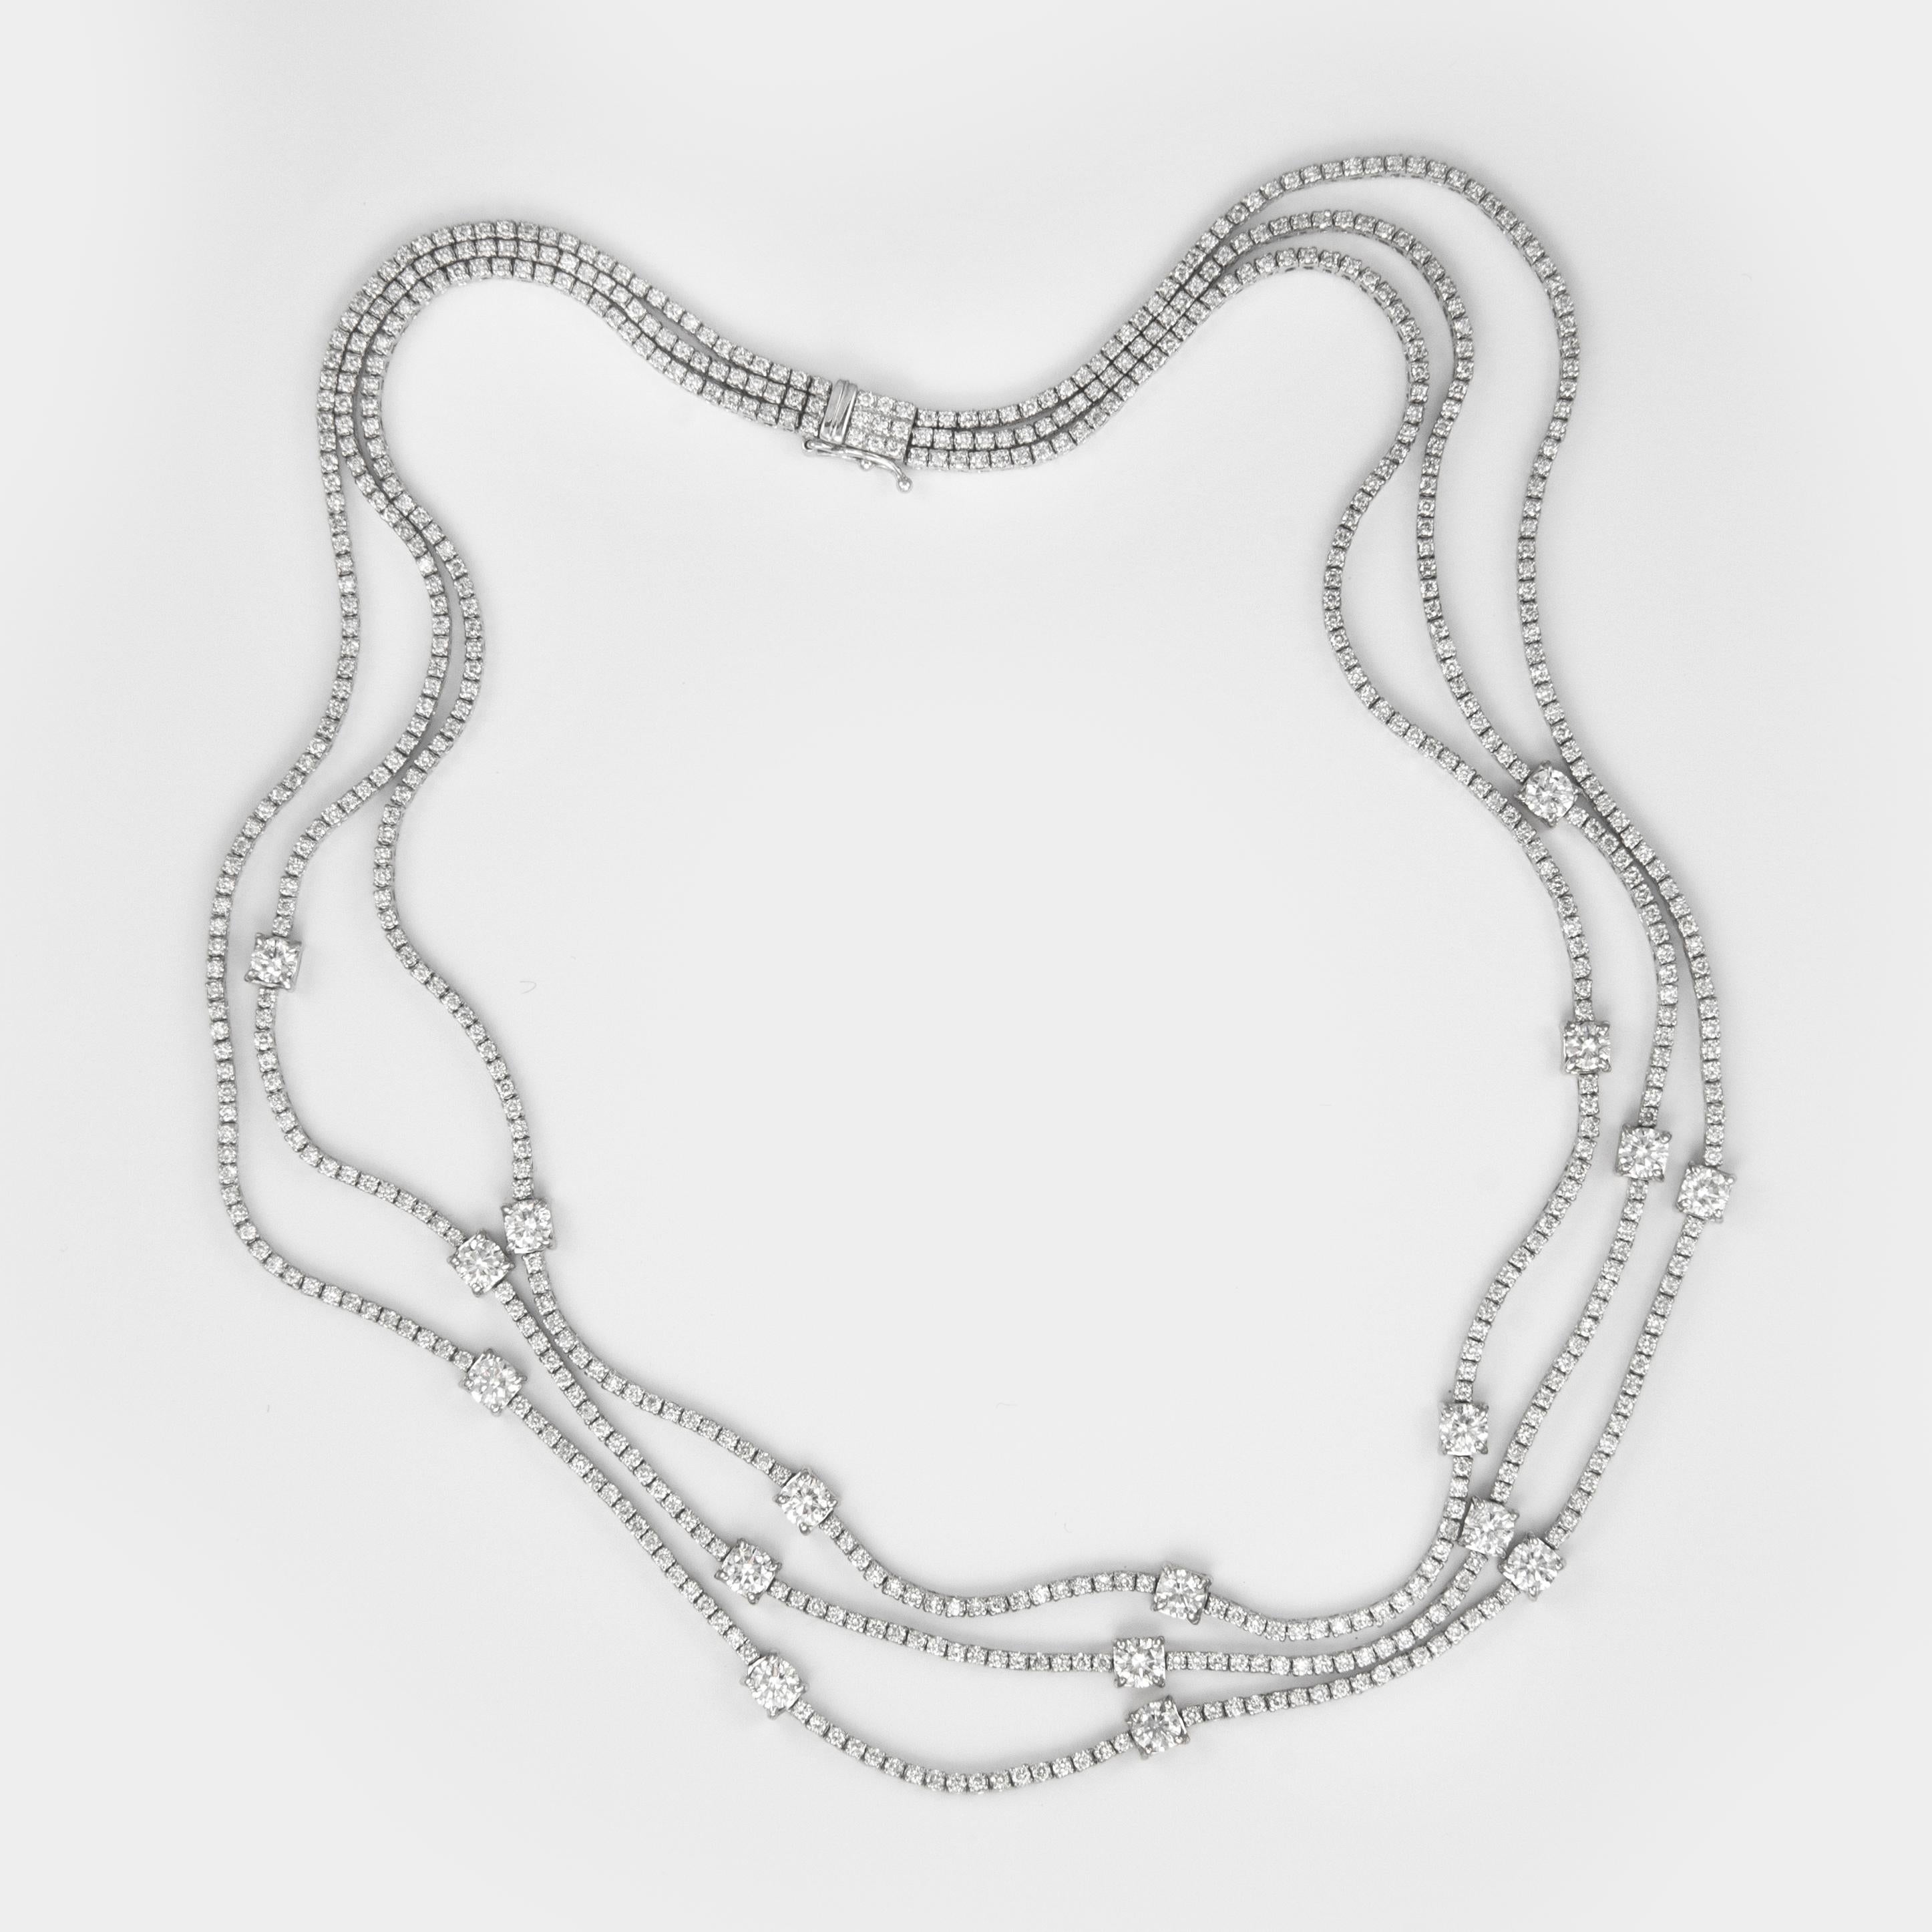 3 carat diamond tennis necklace